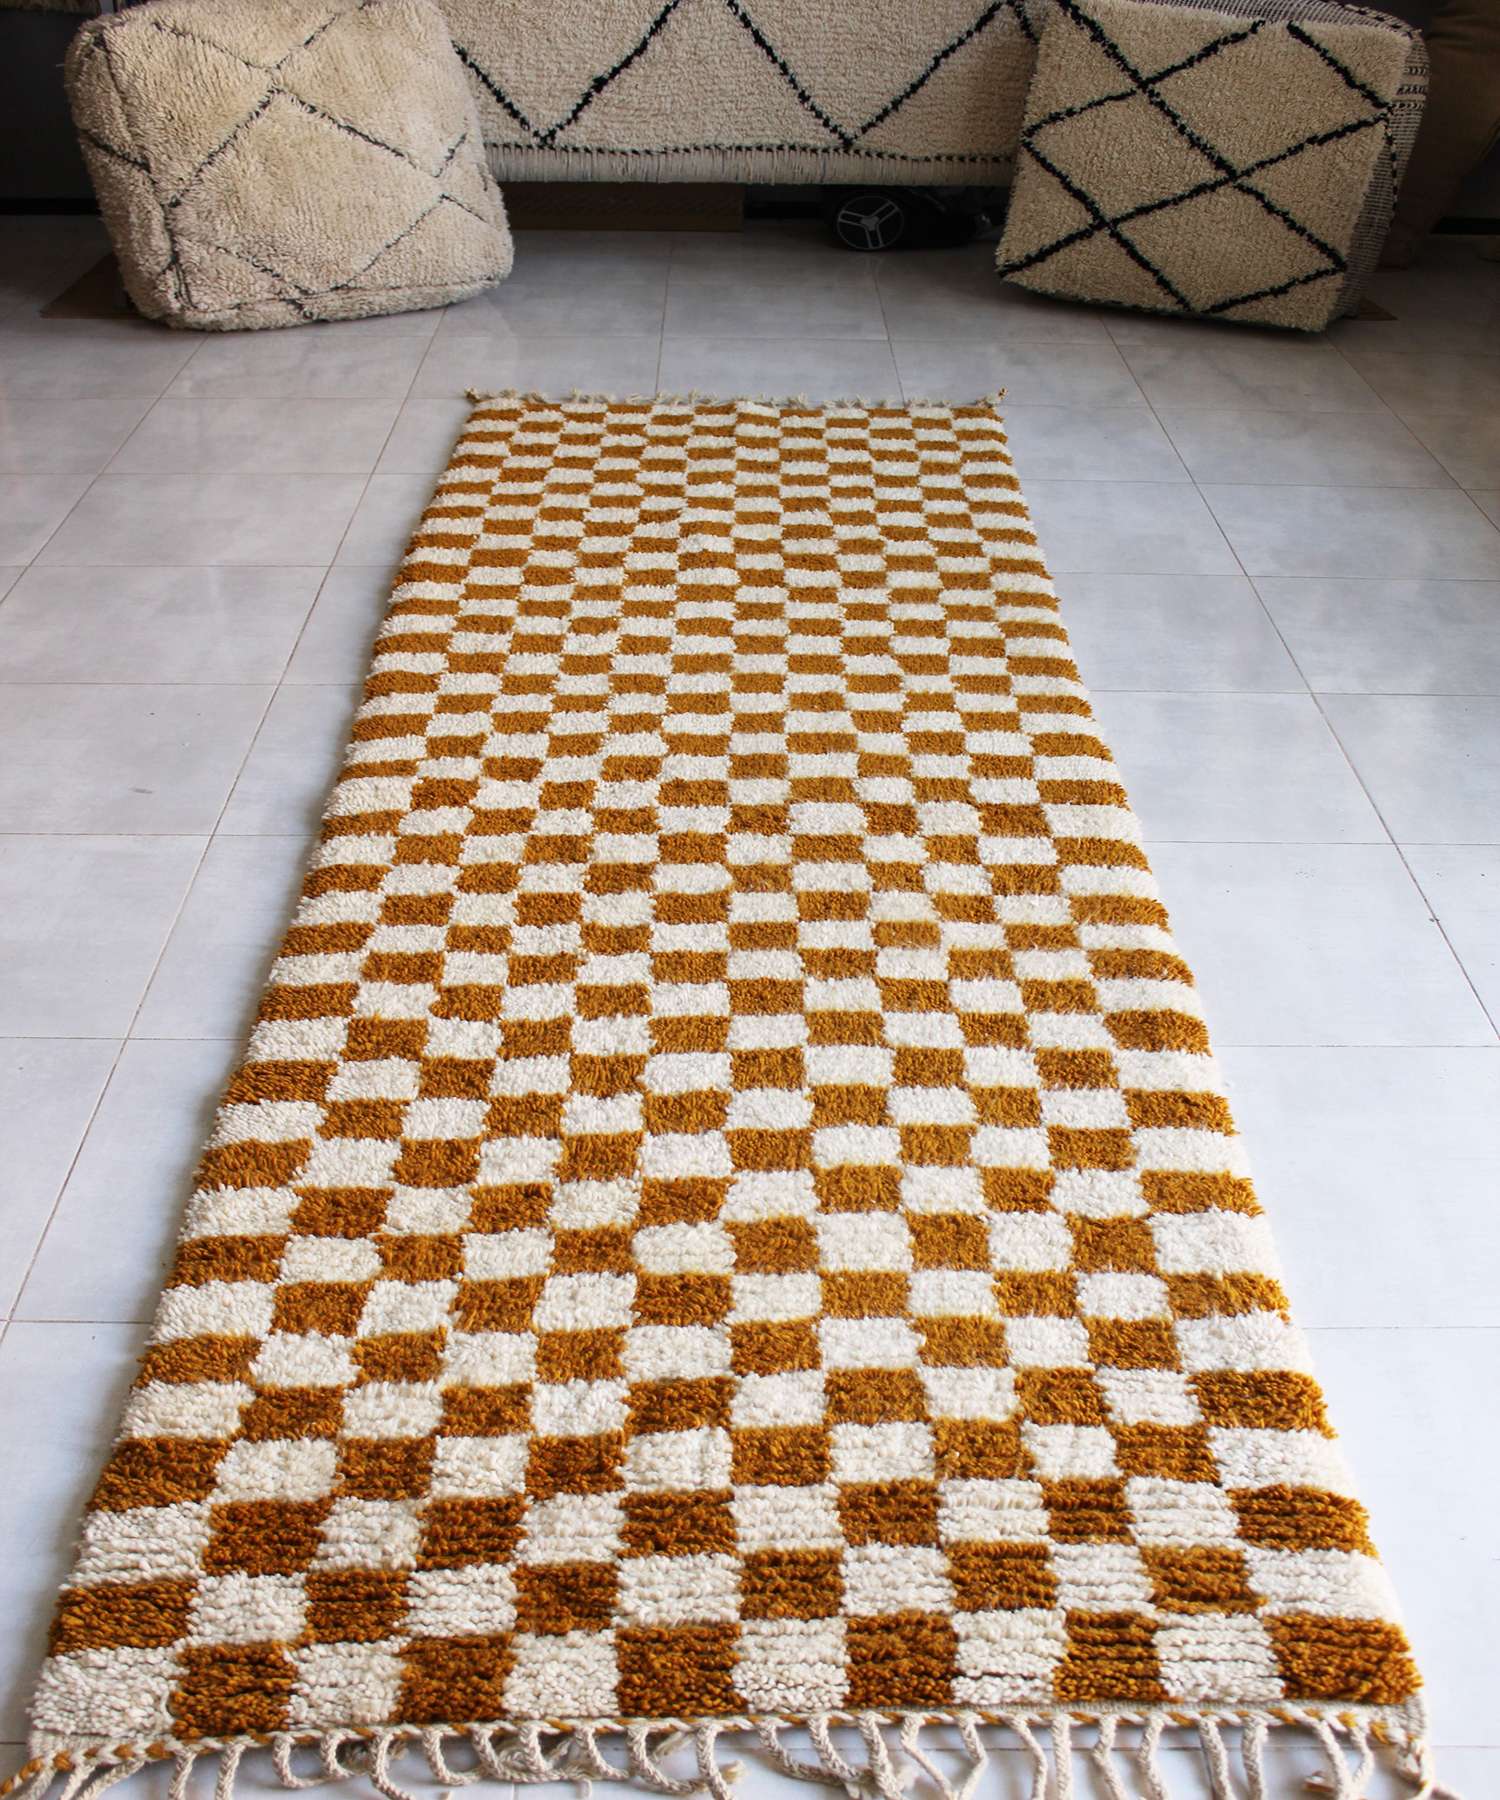 Tradutional handwoven Berber Atlas rugs